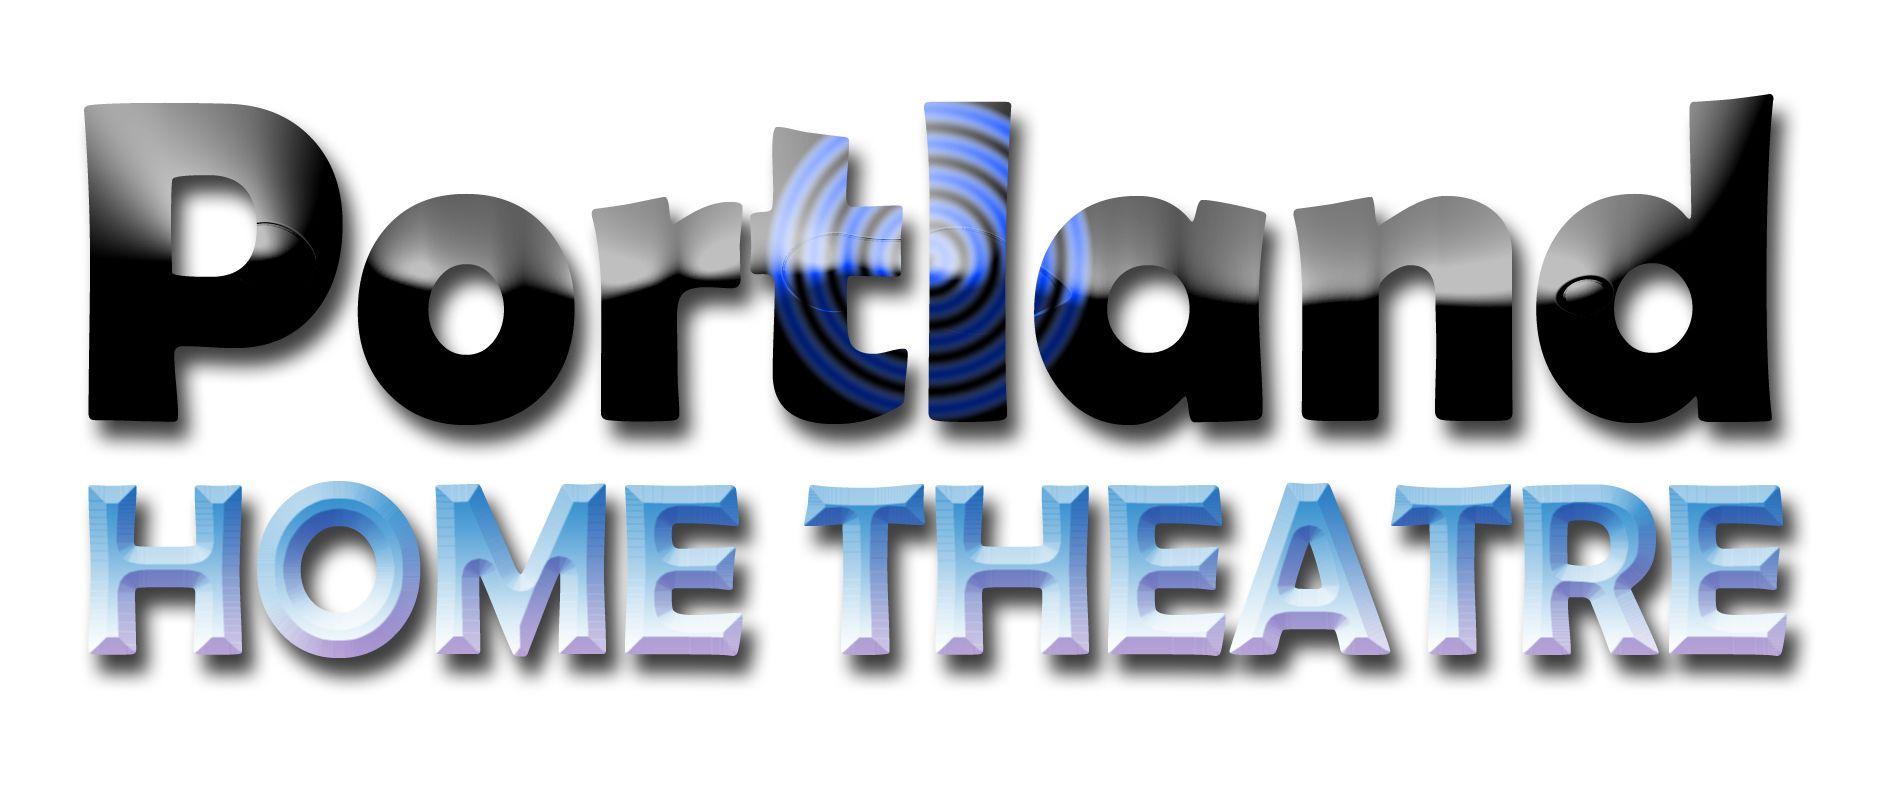 Century Theaters Logo - Pin Home theater logos on Pinterest, home theater logo - White House